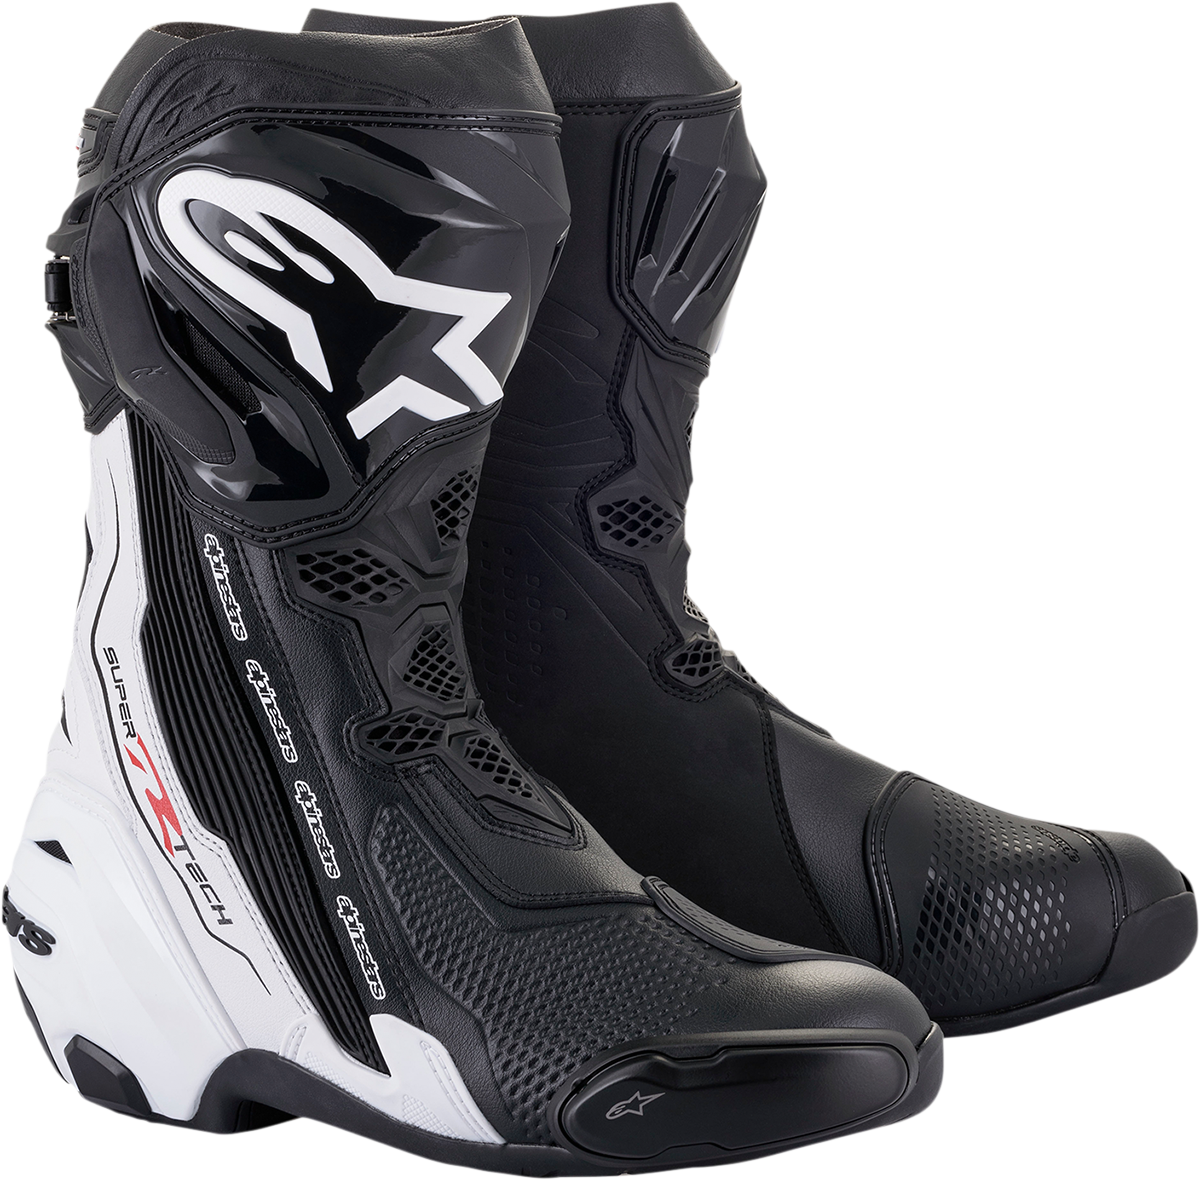 ALPINESTARS Supertech R Boots - Black/White - US 11.5 / EU 46 2220021-12-46